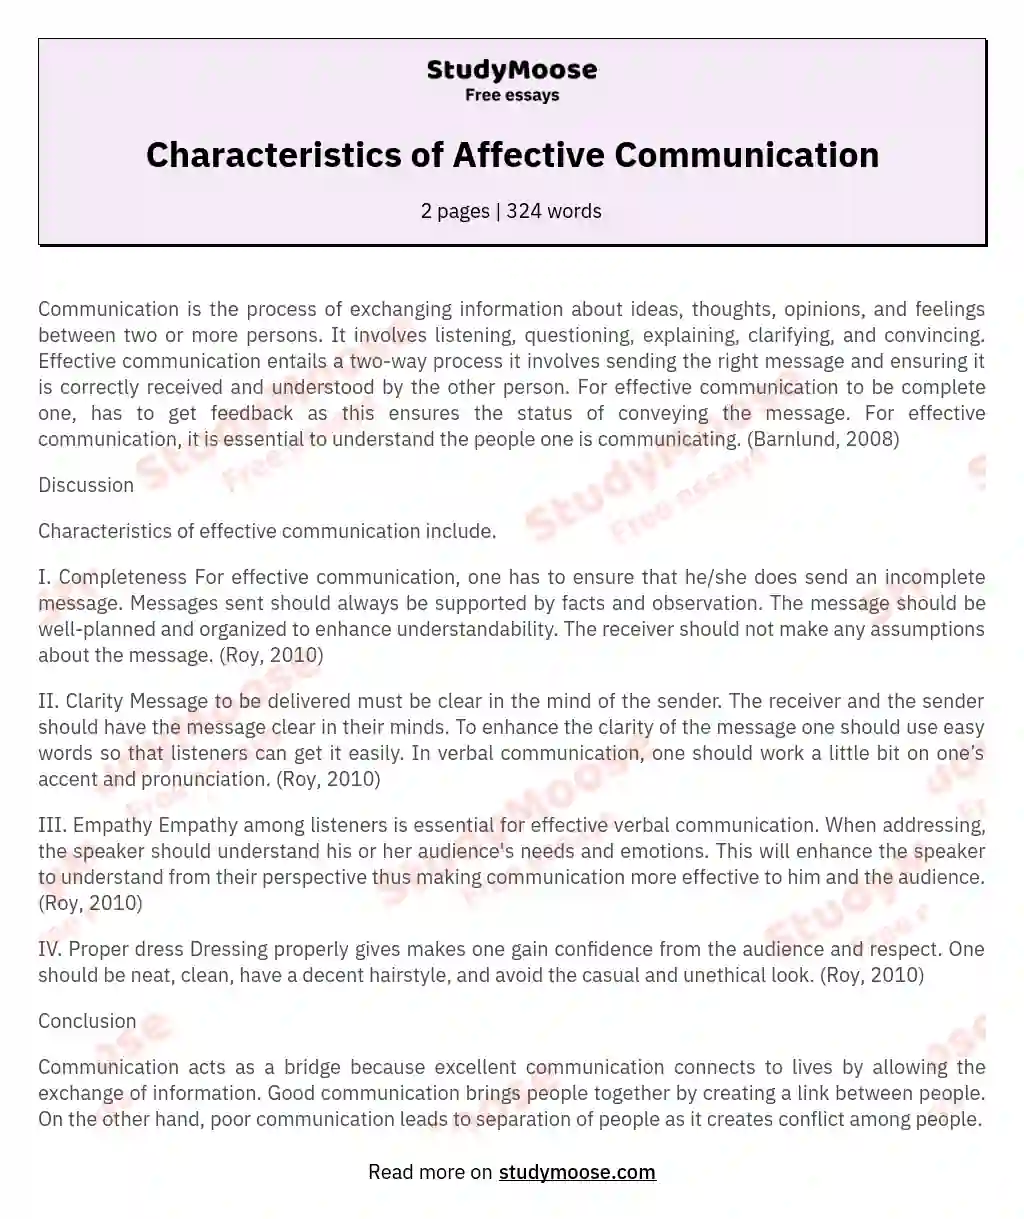 Characteristics of Affective Communication essay